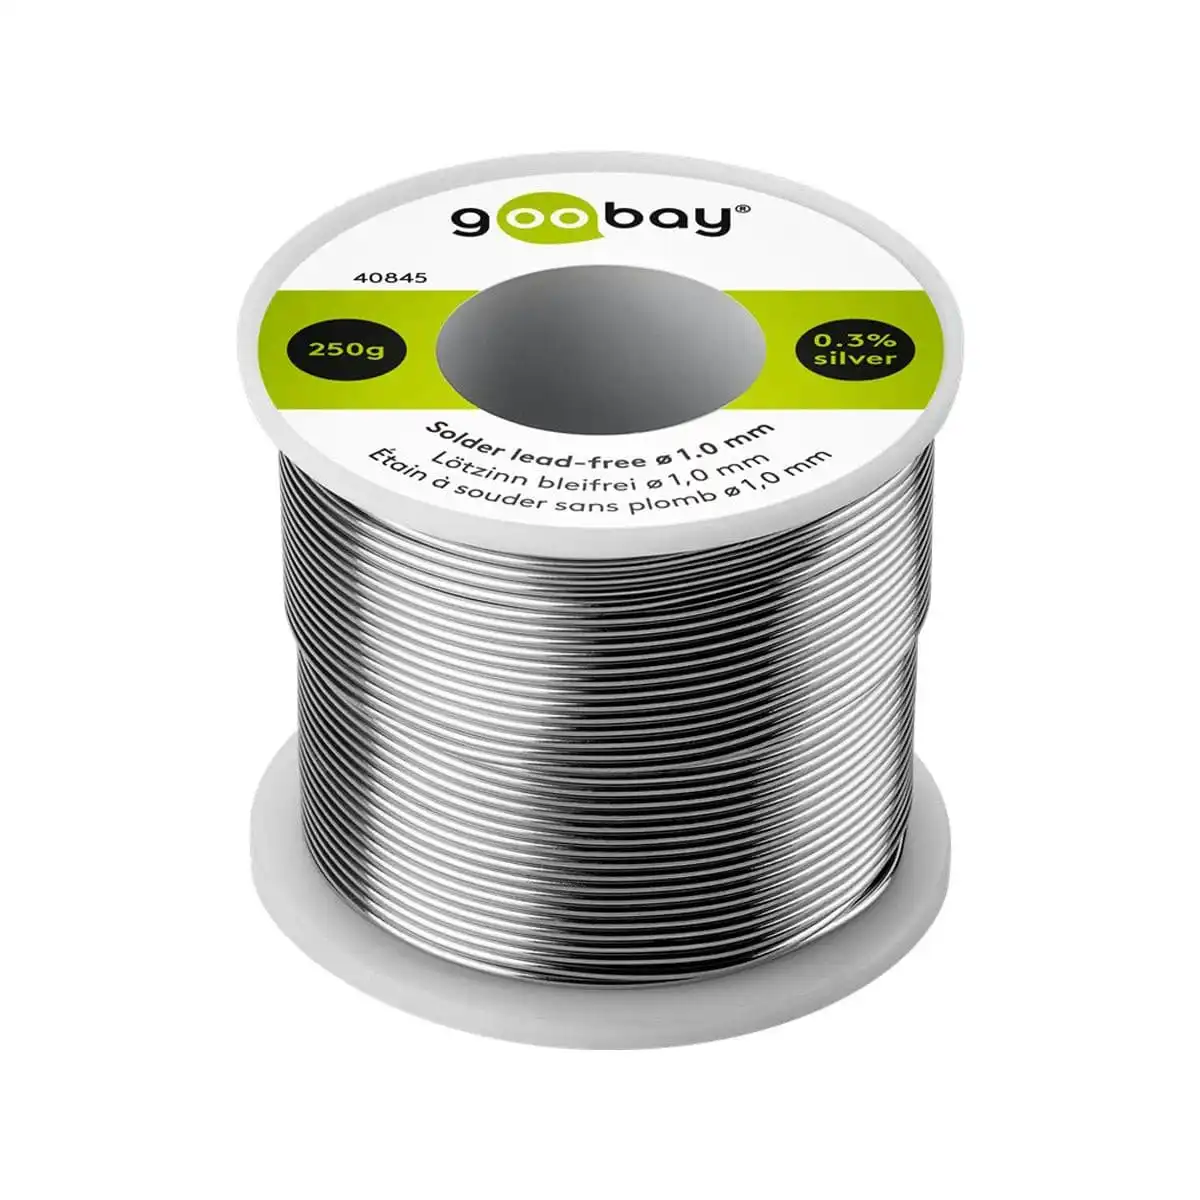 Goobay Professional Solder Lead-Free - 1.0 mm